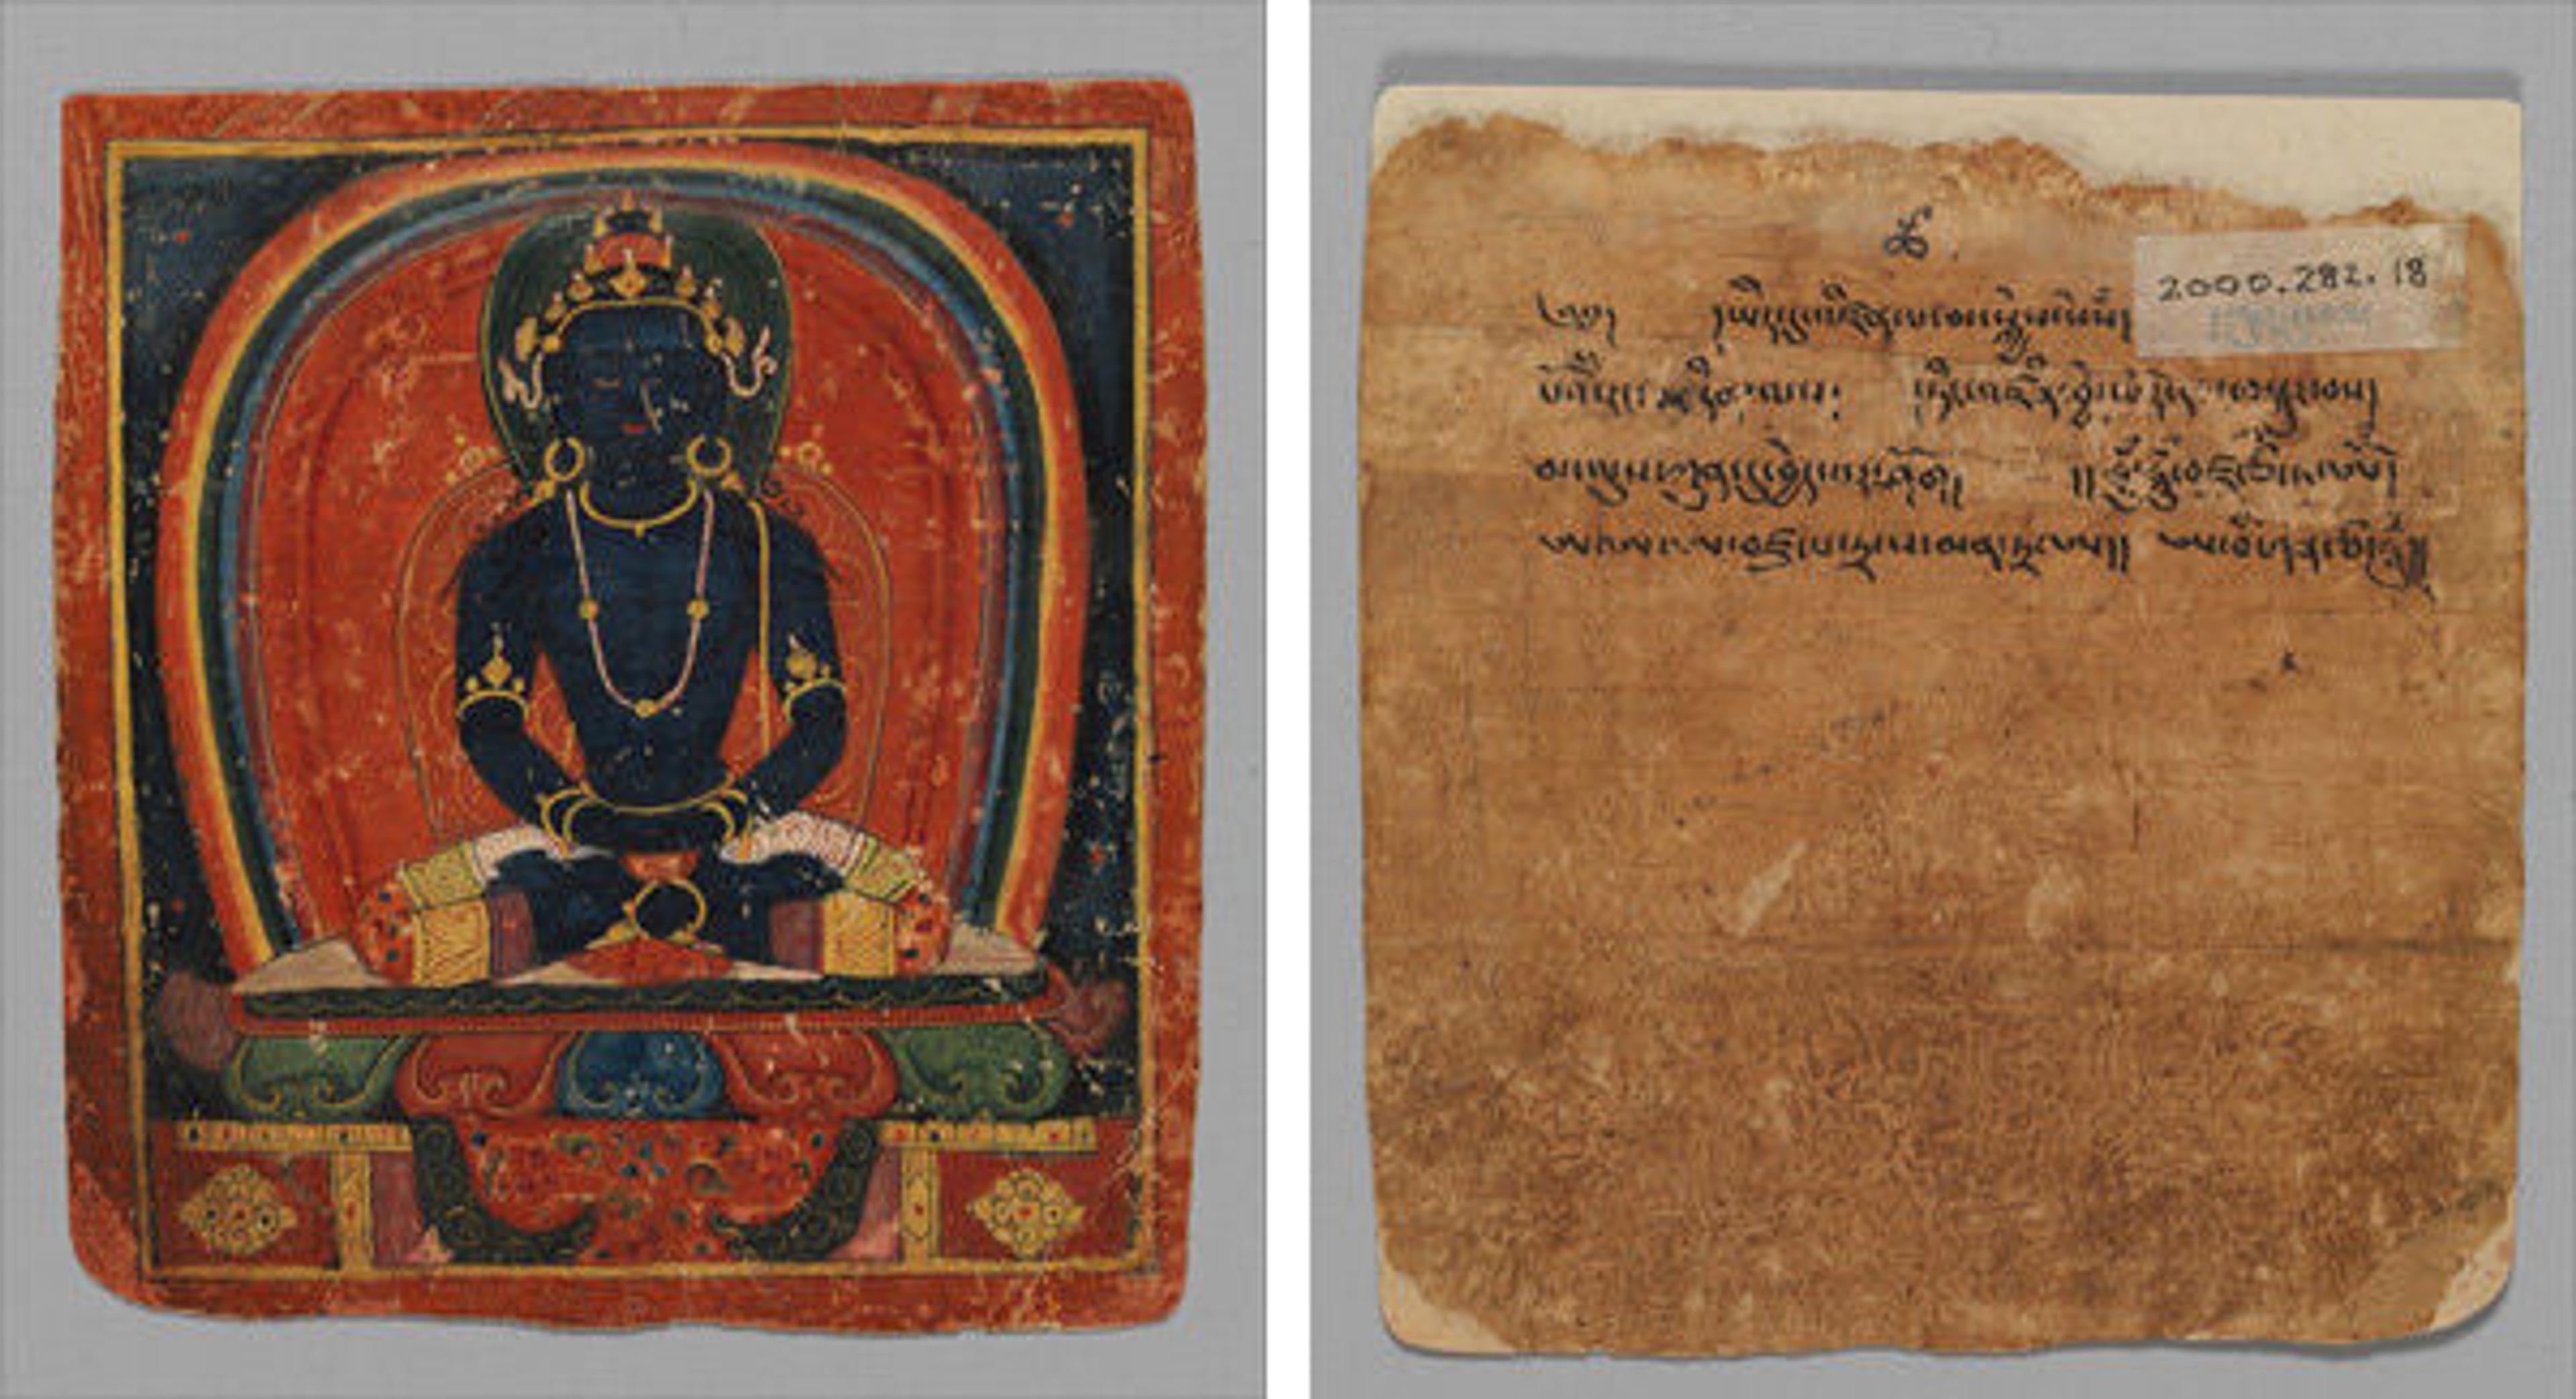 Initiation Card (Tsakalis), early 15th century. Tibet. 2000.282.18